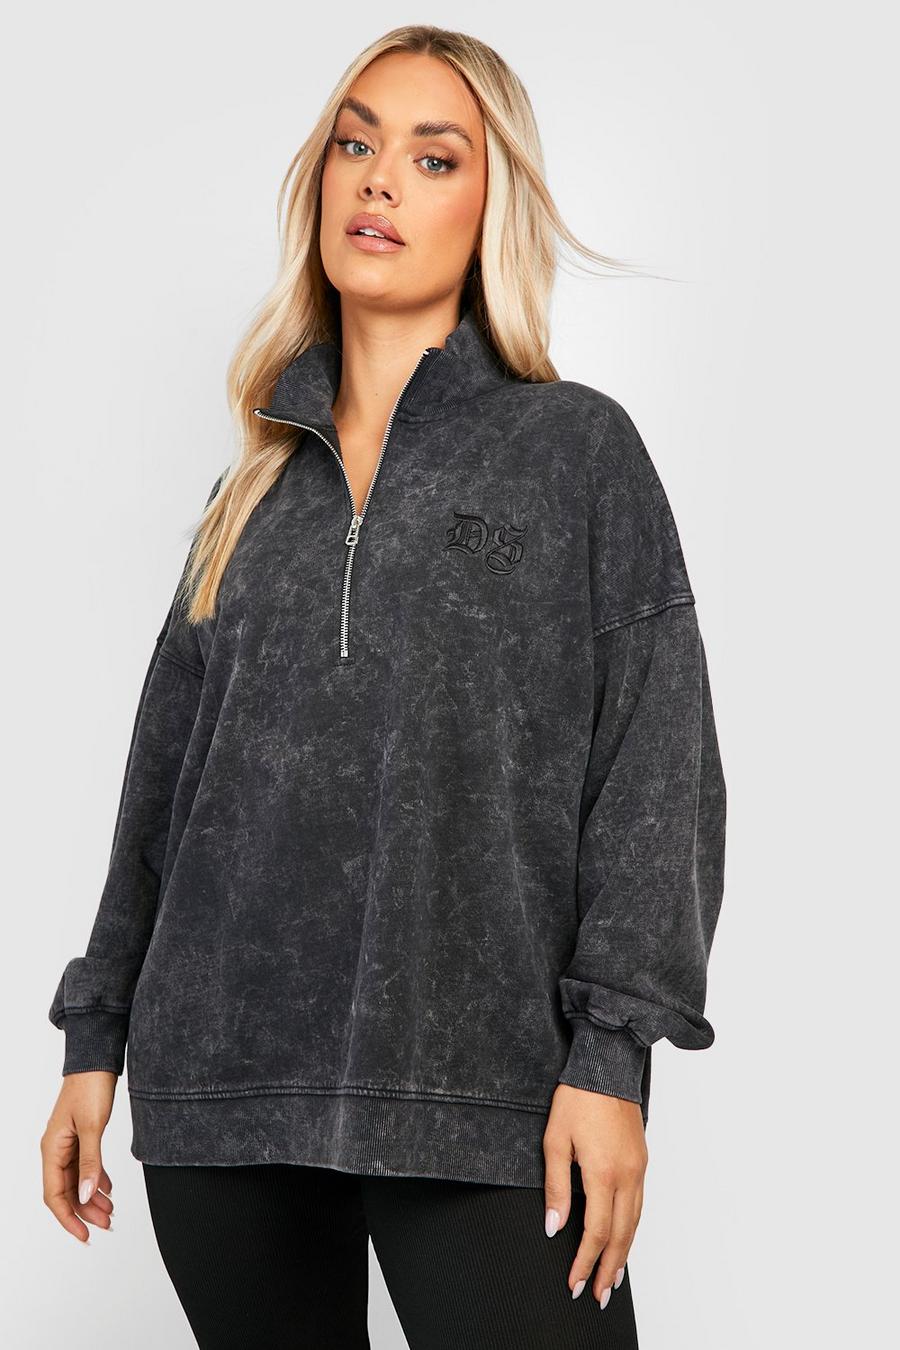 Charcoal Plus Acid Wash Embroidered Half Zip Sweater